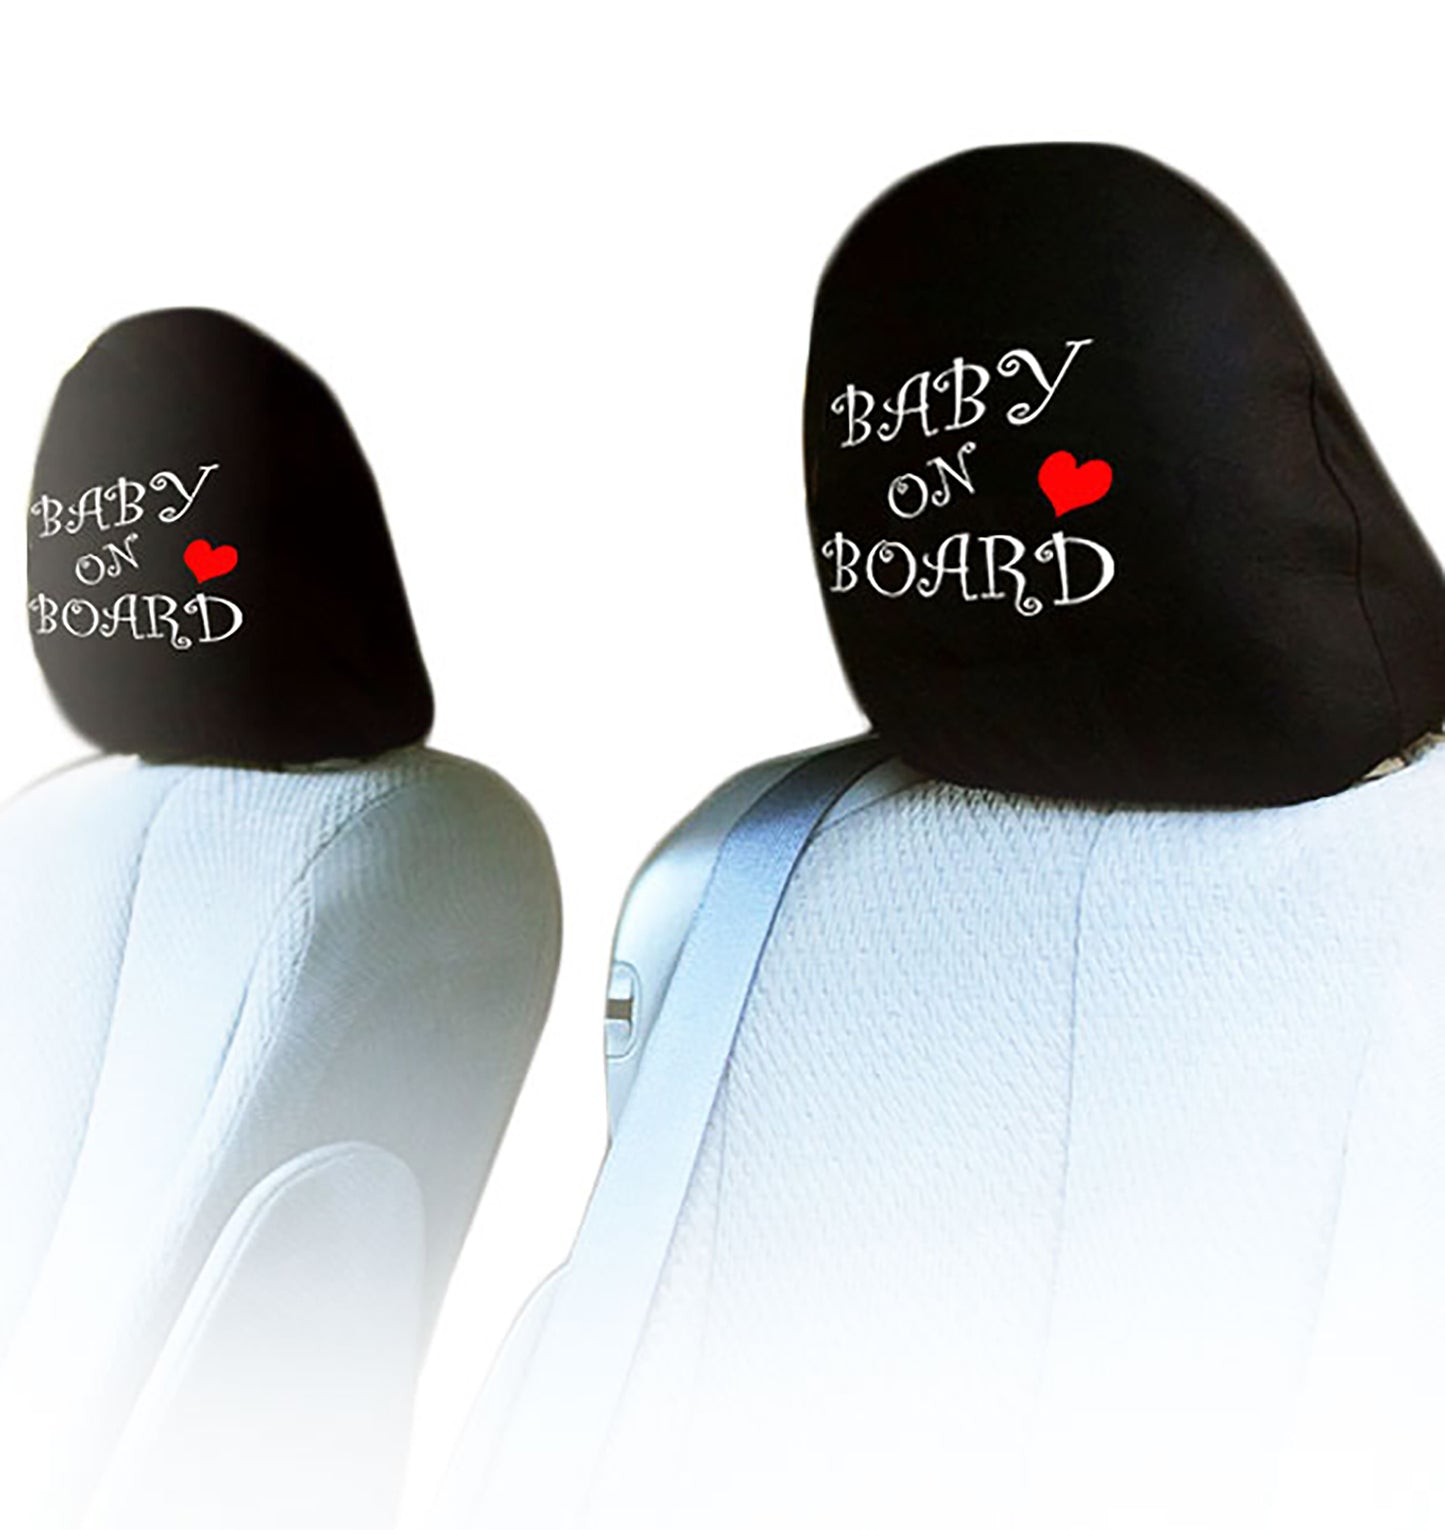 Embroidery Baby on Board Logo Design Auto Truck SUV Car Seat Headrest Cover Accessory 1 Pair - Yupbizauto